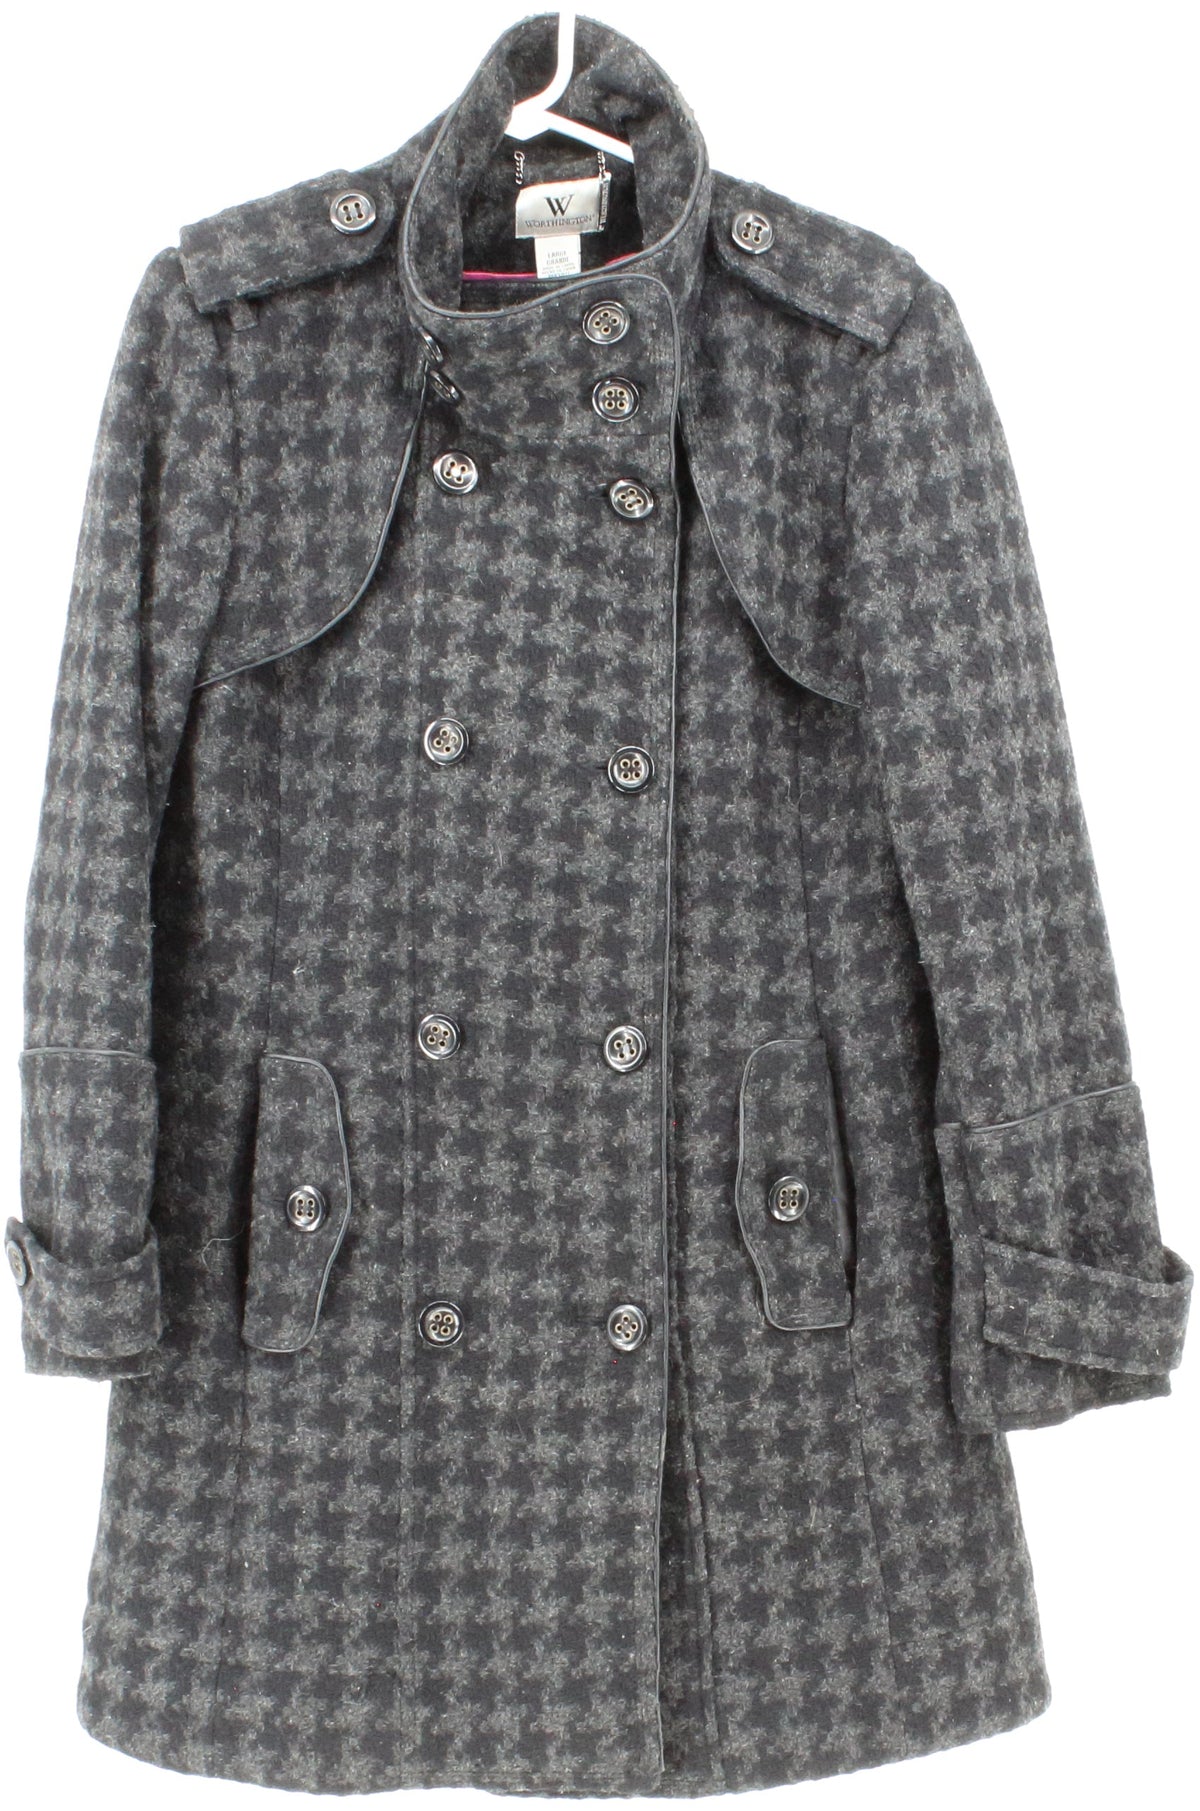 Worthington Black and Grey Print Women's Wool Coat